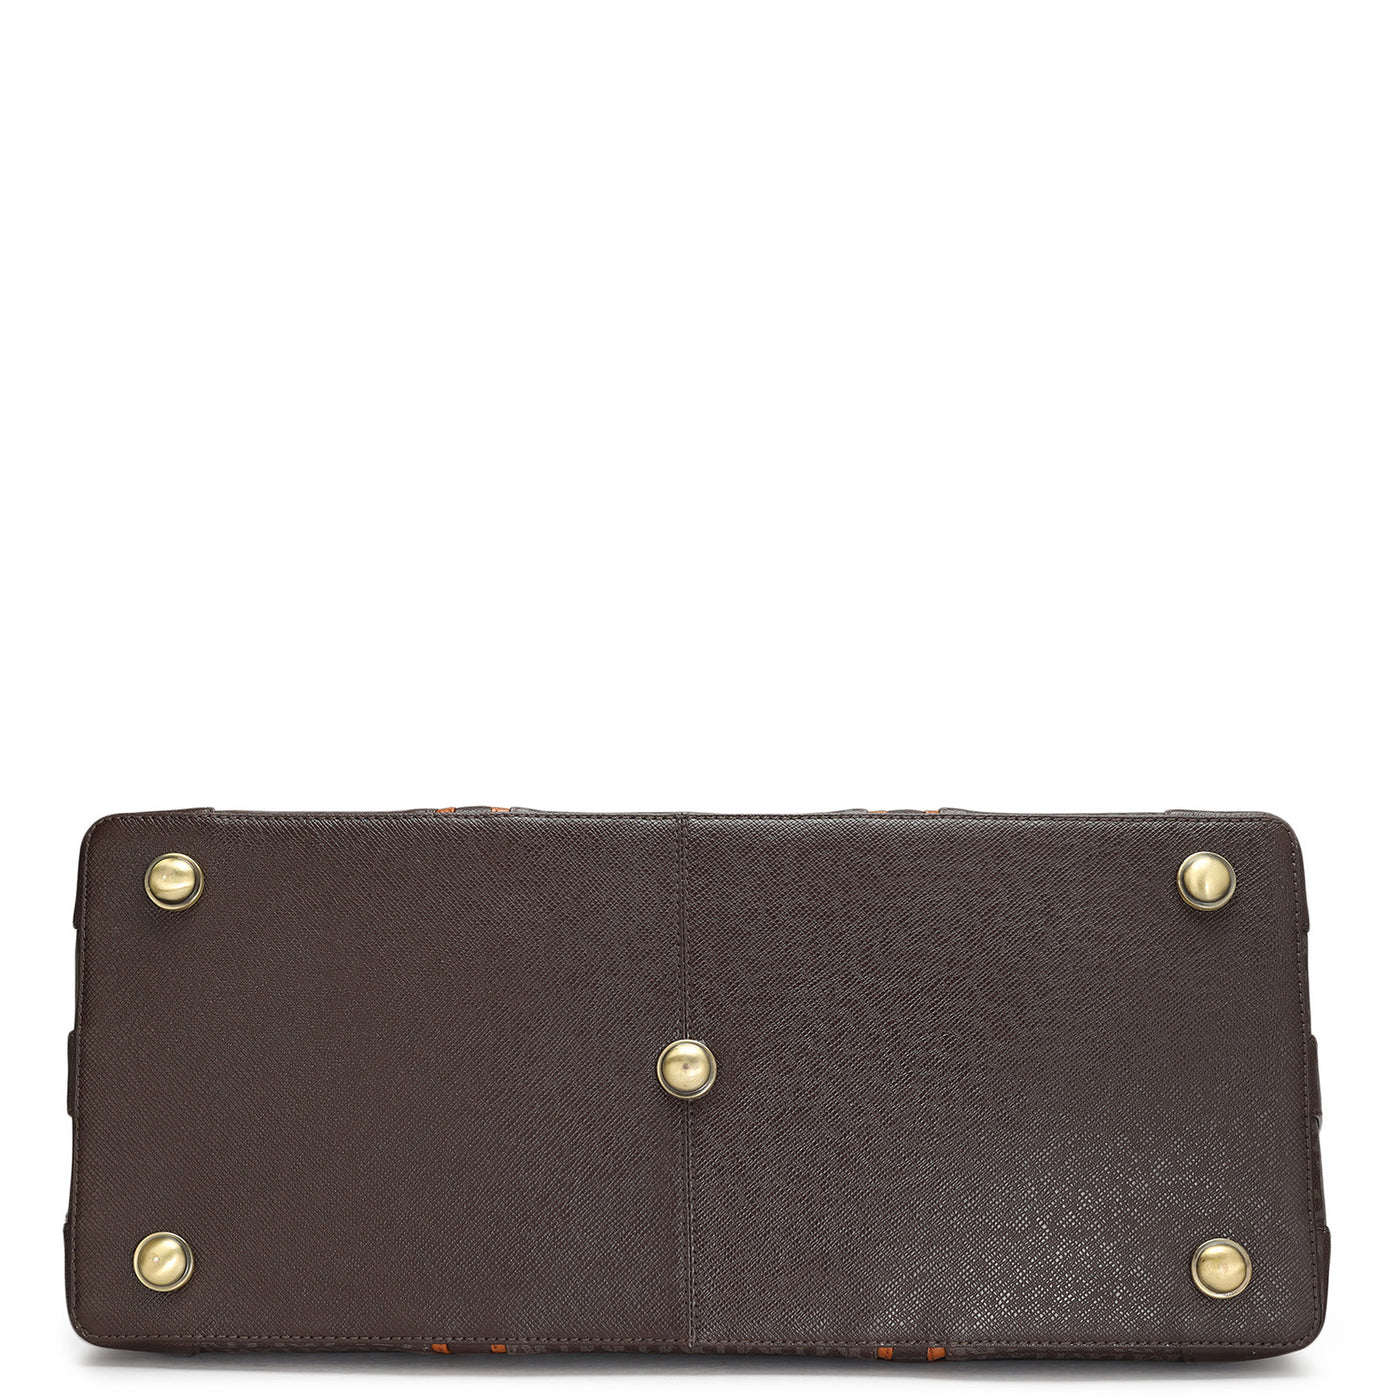 Monogram Leather Luggage - Chocolate